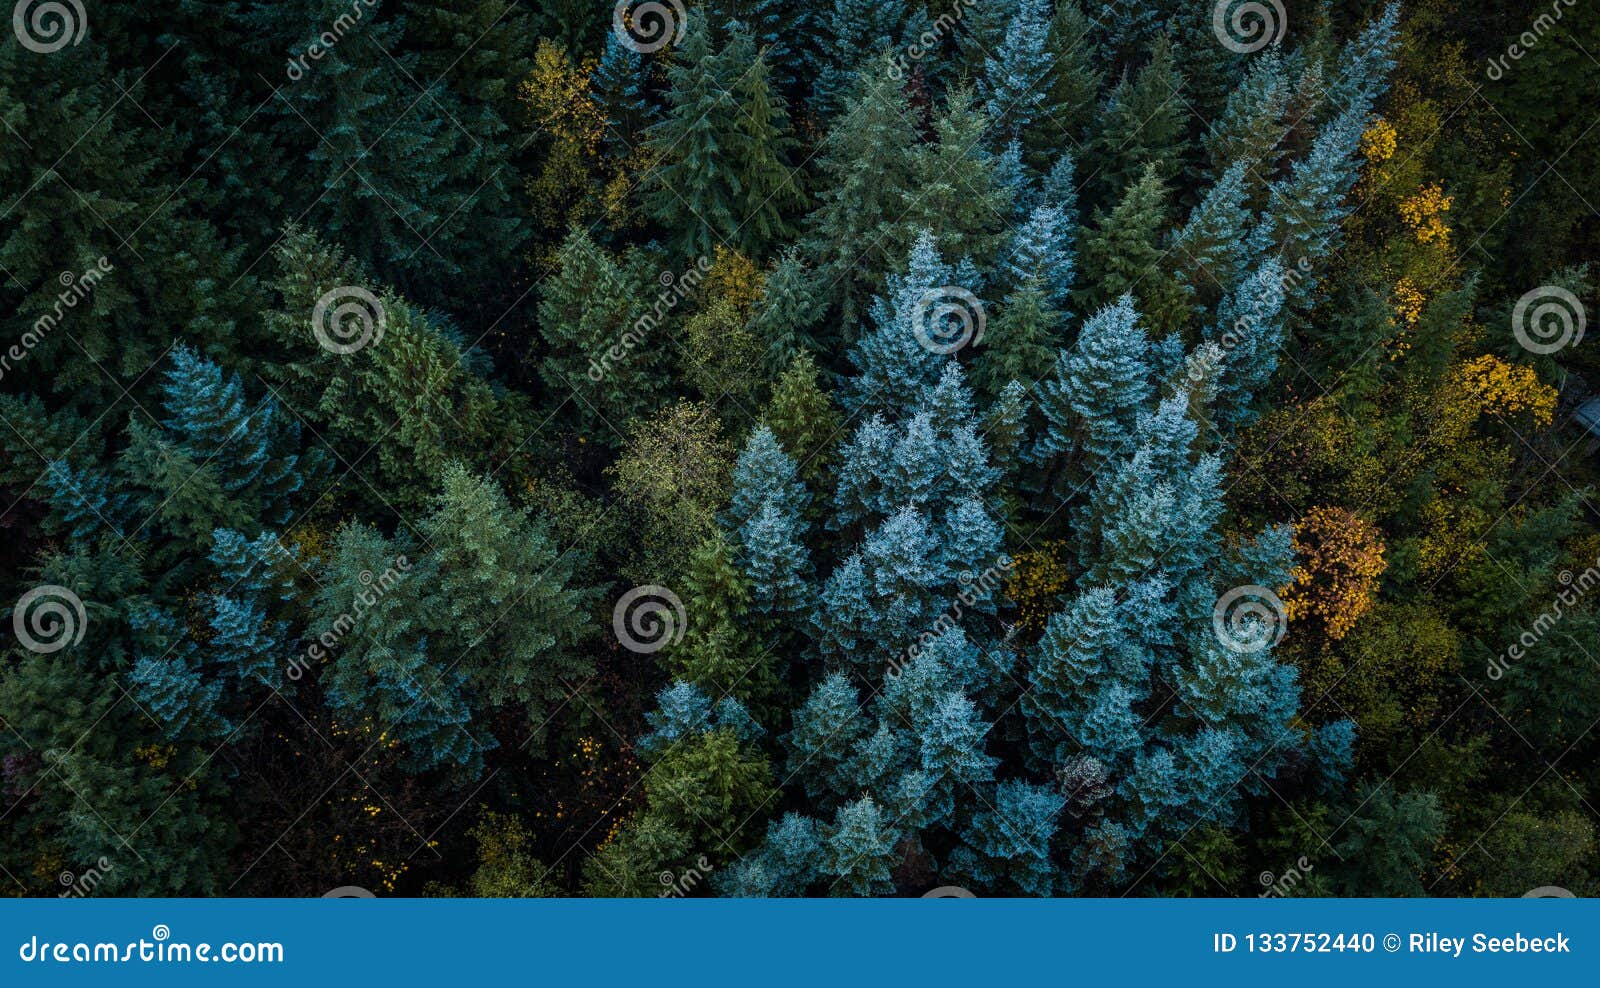 evergreen trees in washington state